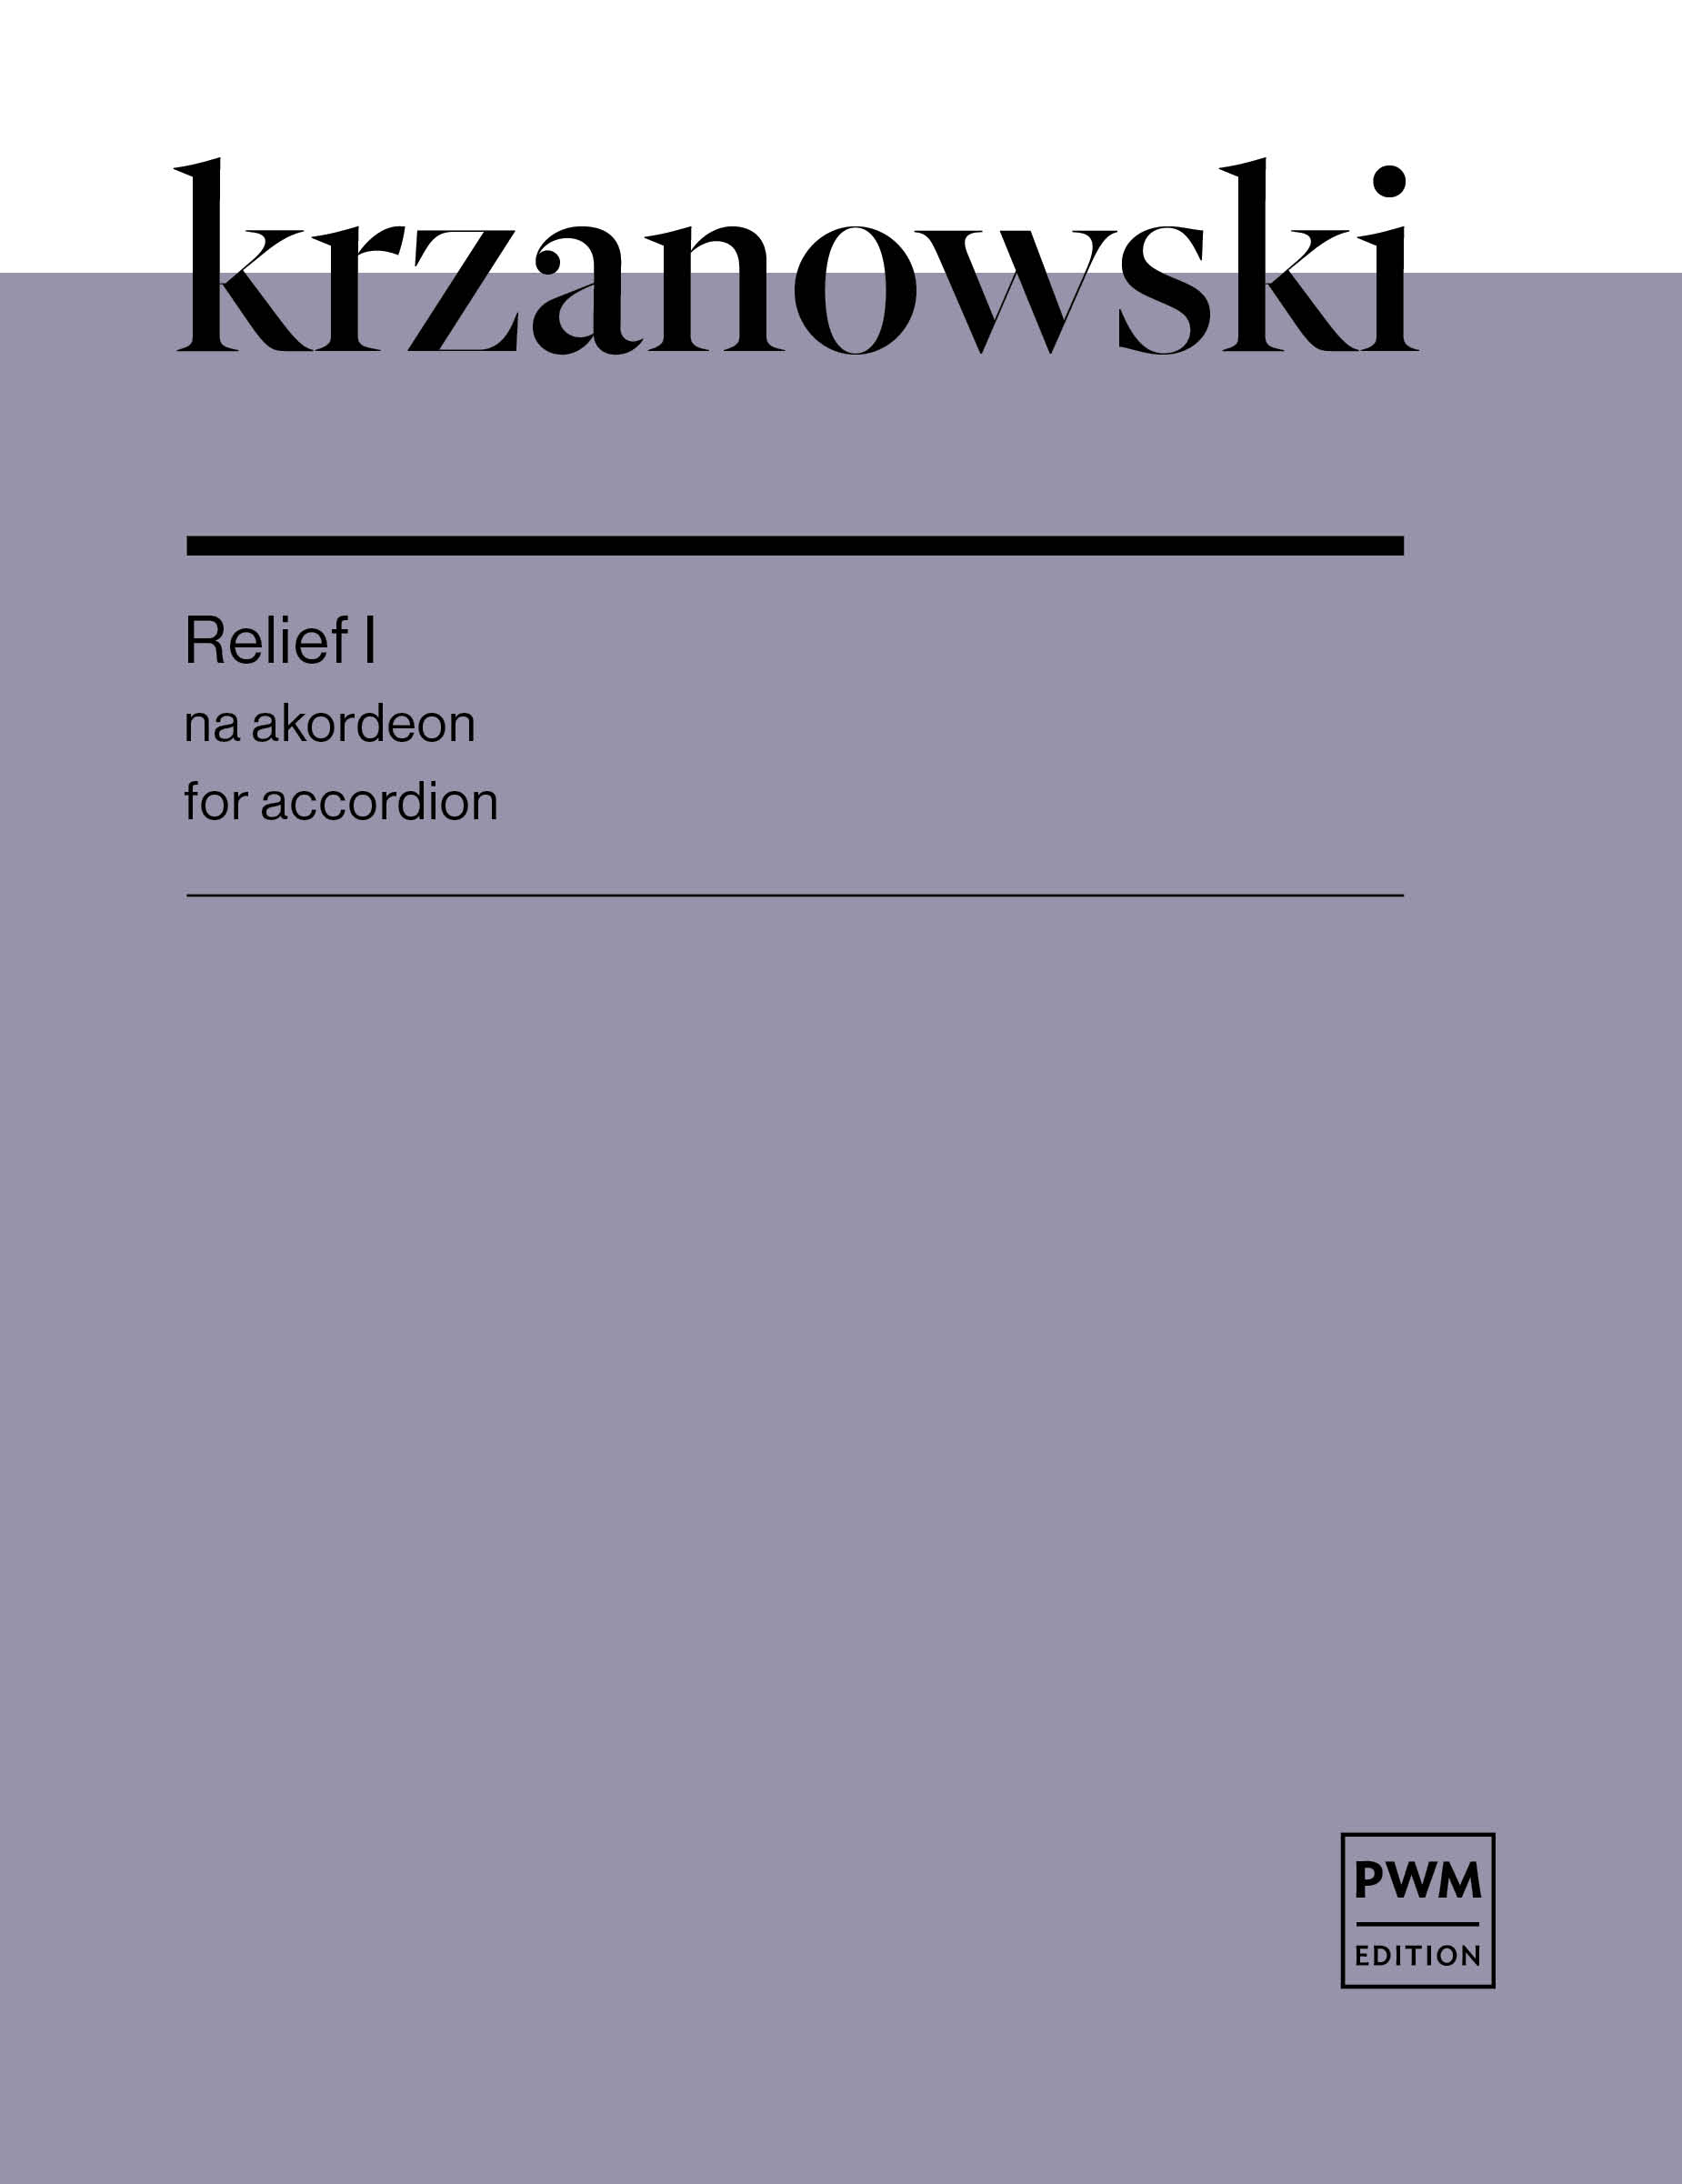 Krzanowski Relief I Accordion Sheet Music Songbook